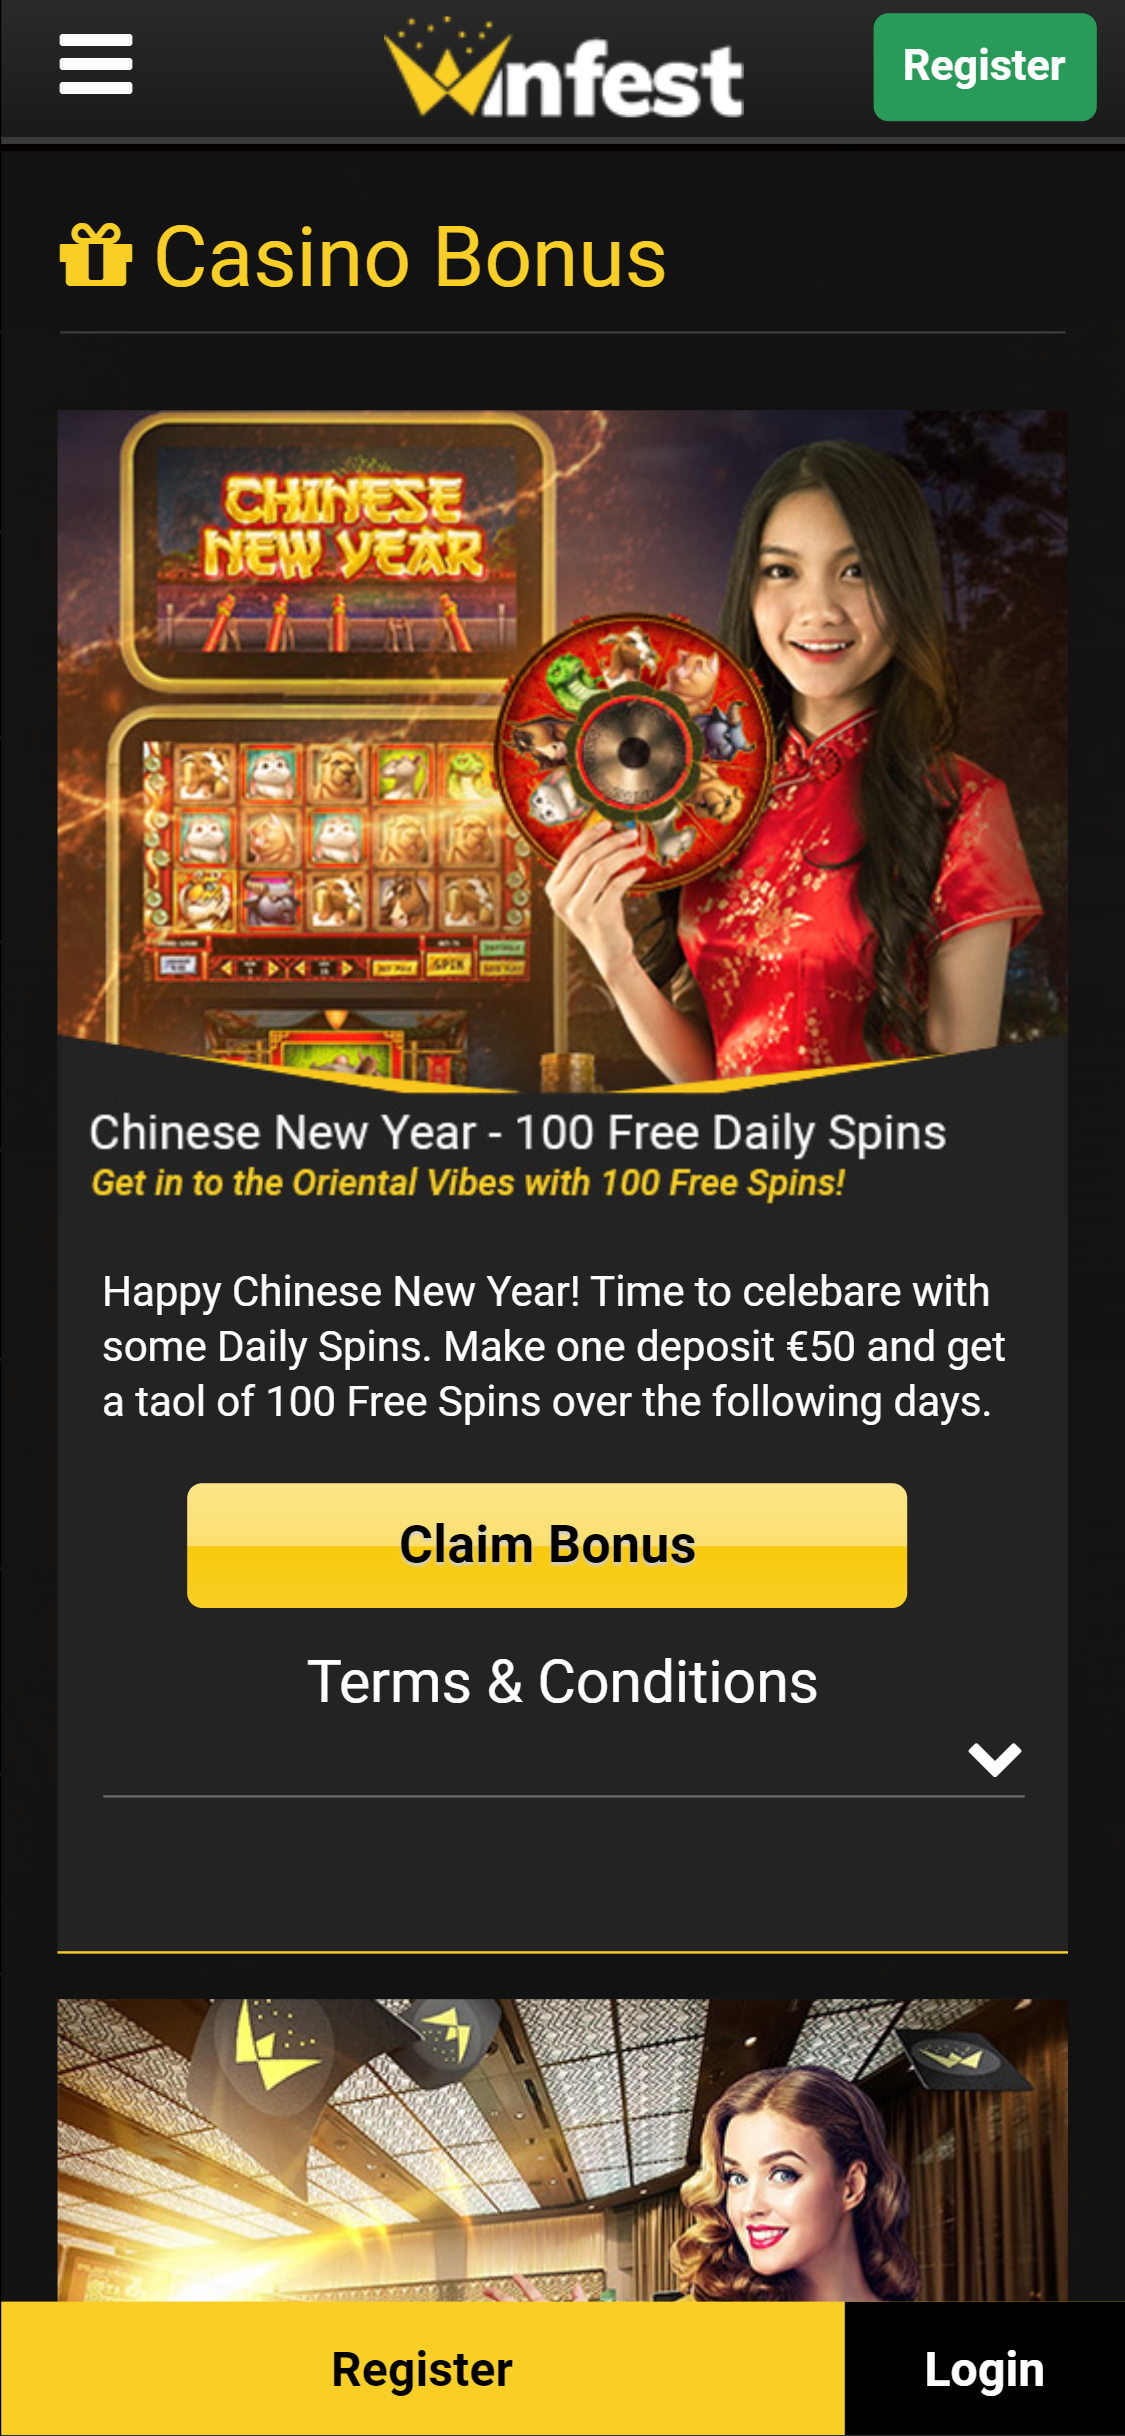 Winfest Casino Mobile No Deposit Bonus Review